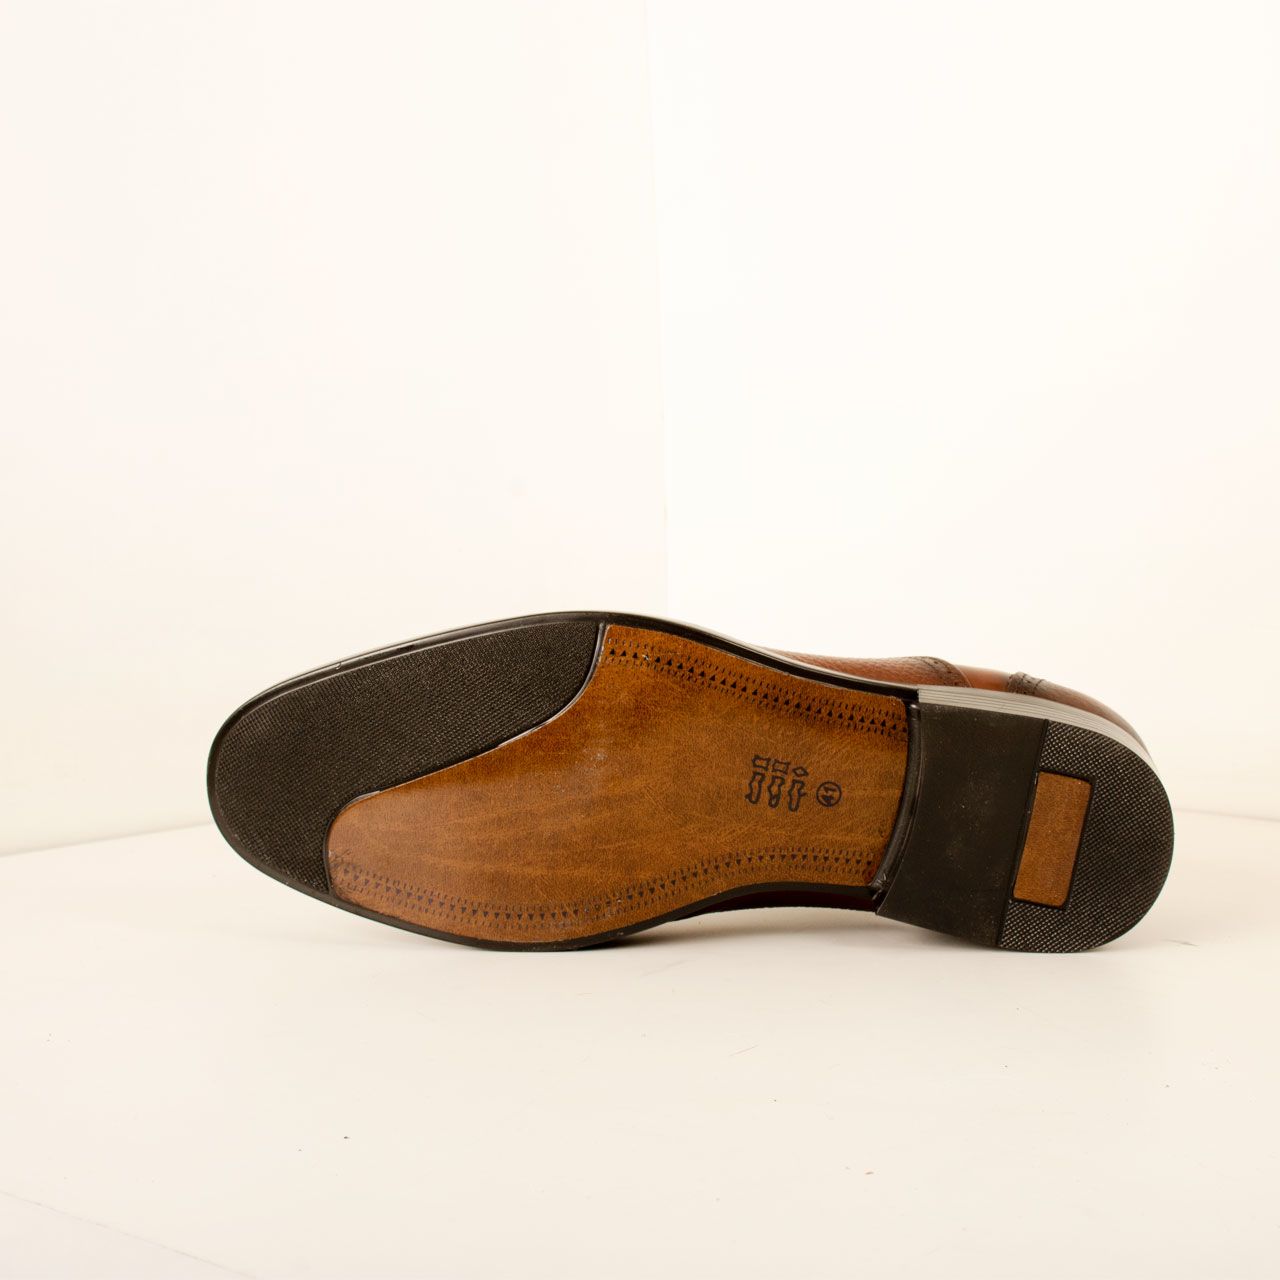  کفش مردانه پارینه چرم مدل SHO208-7 -  - 3